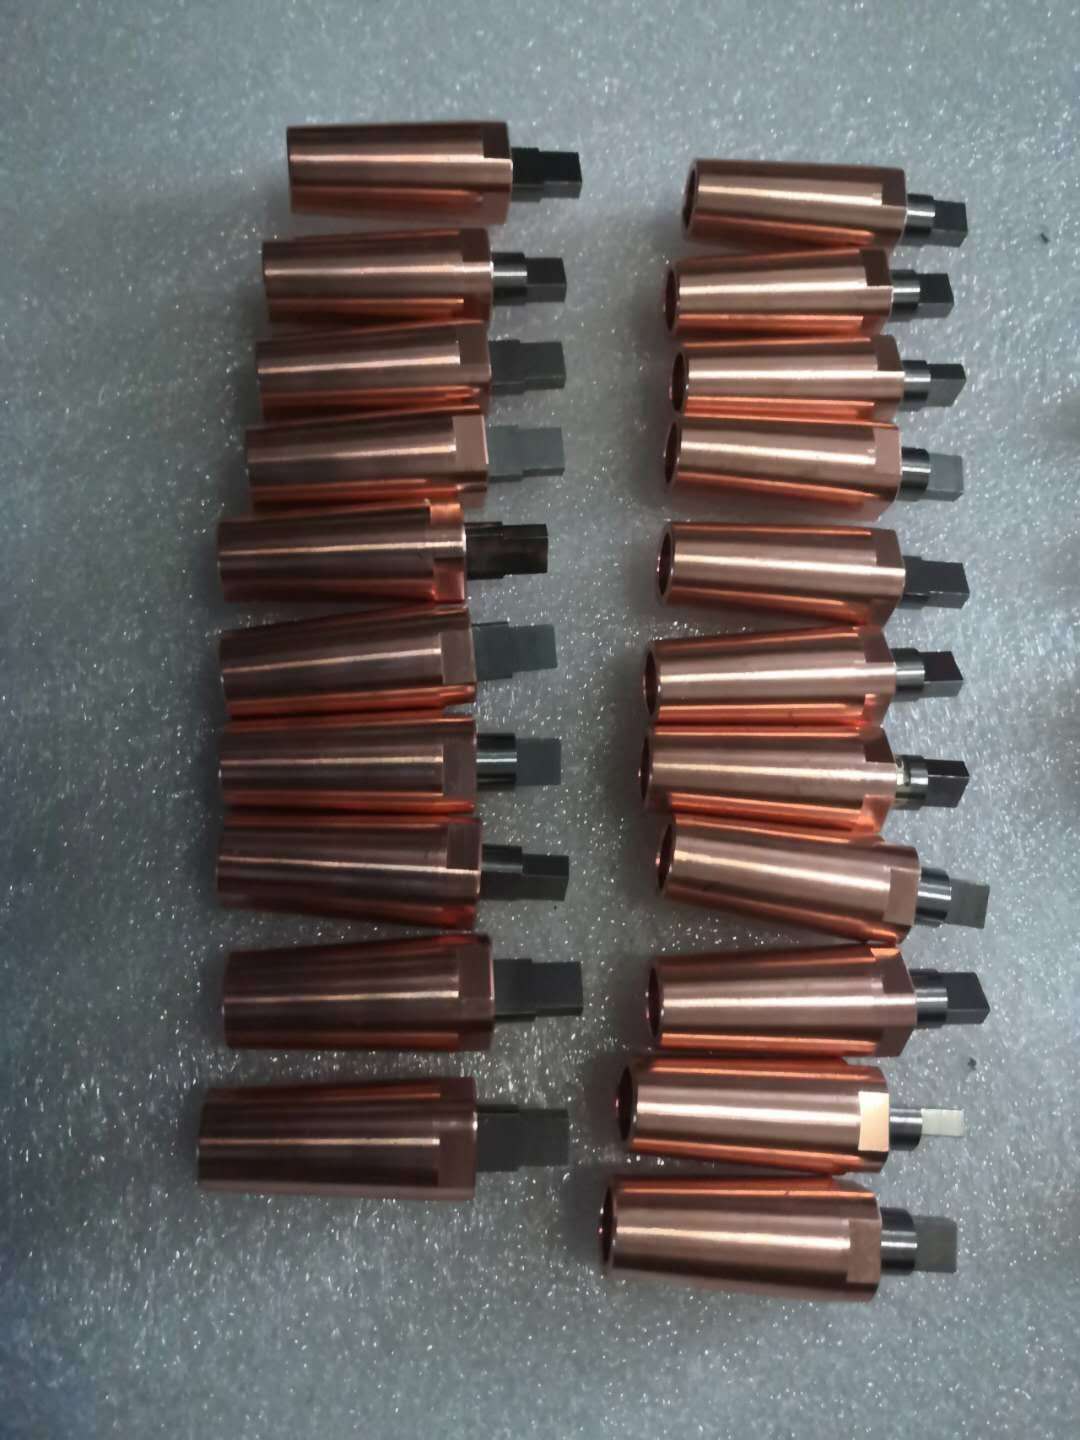 Copper tungsten electrode